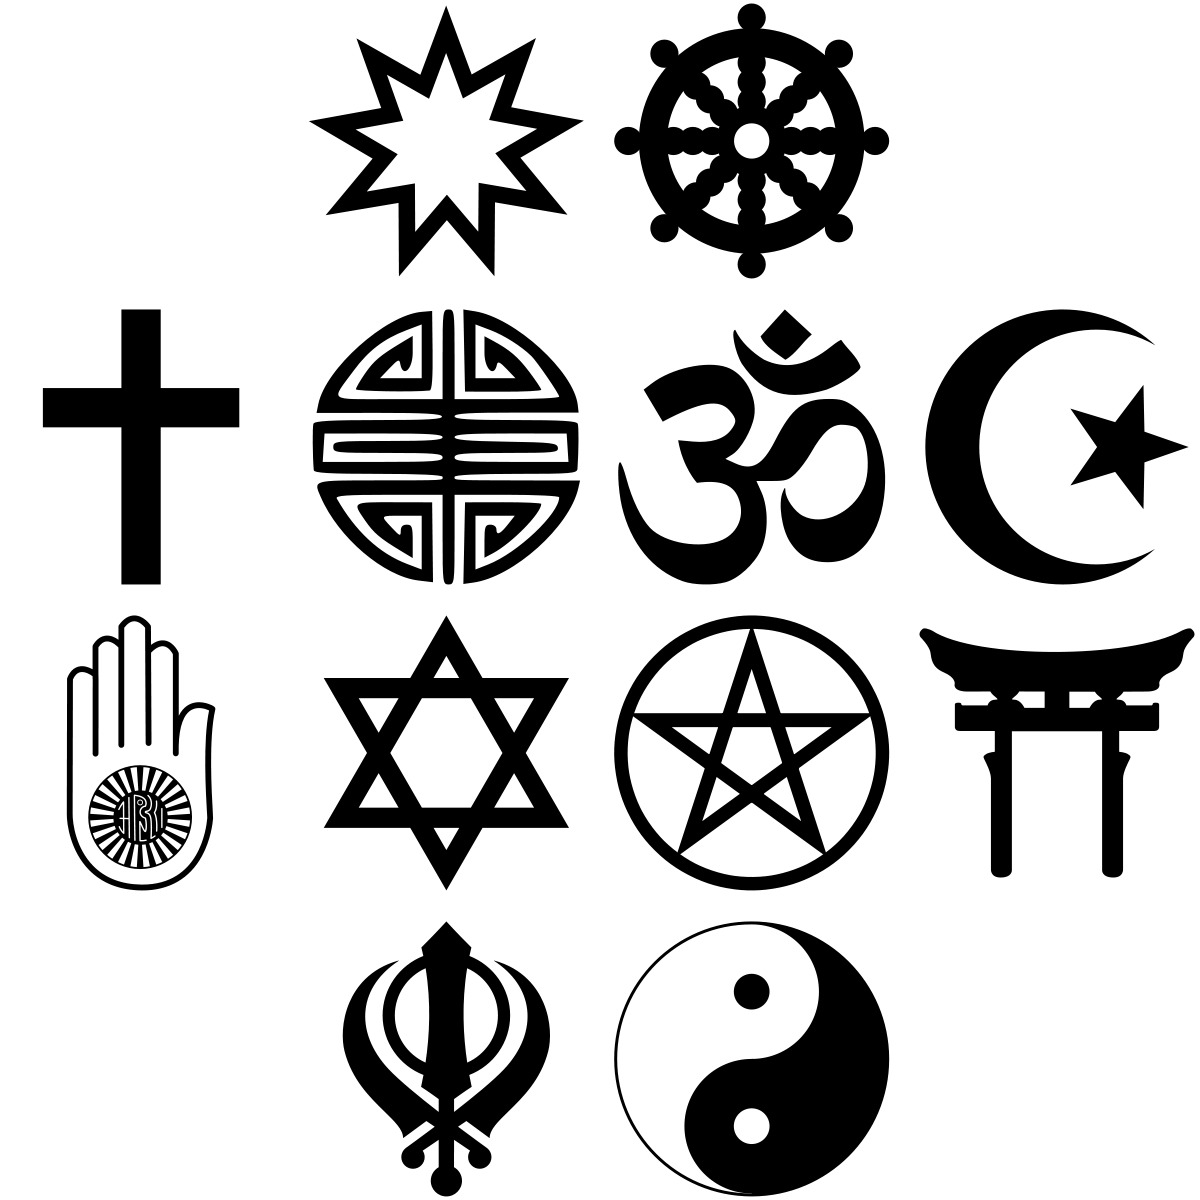 religions of the world symbols